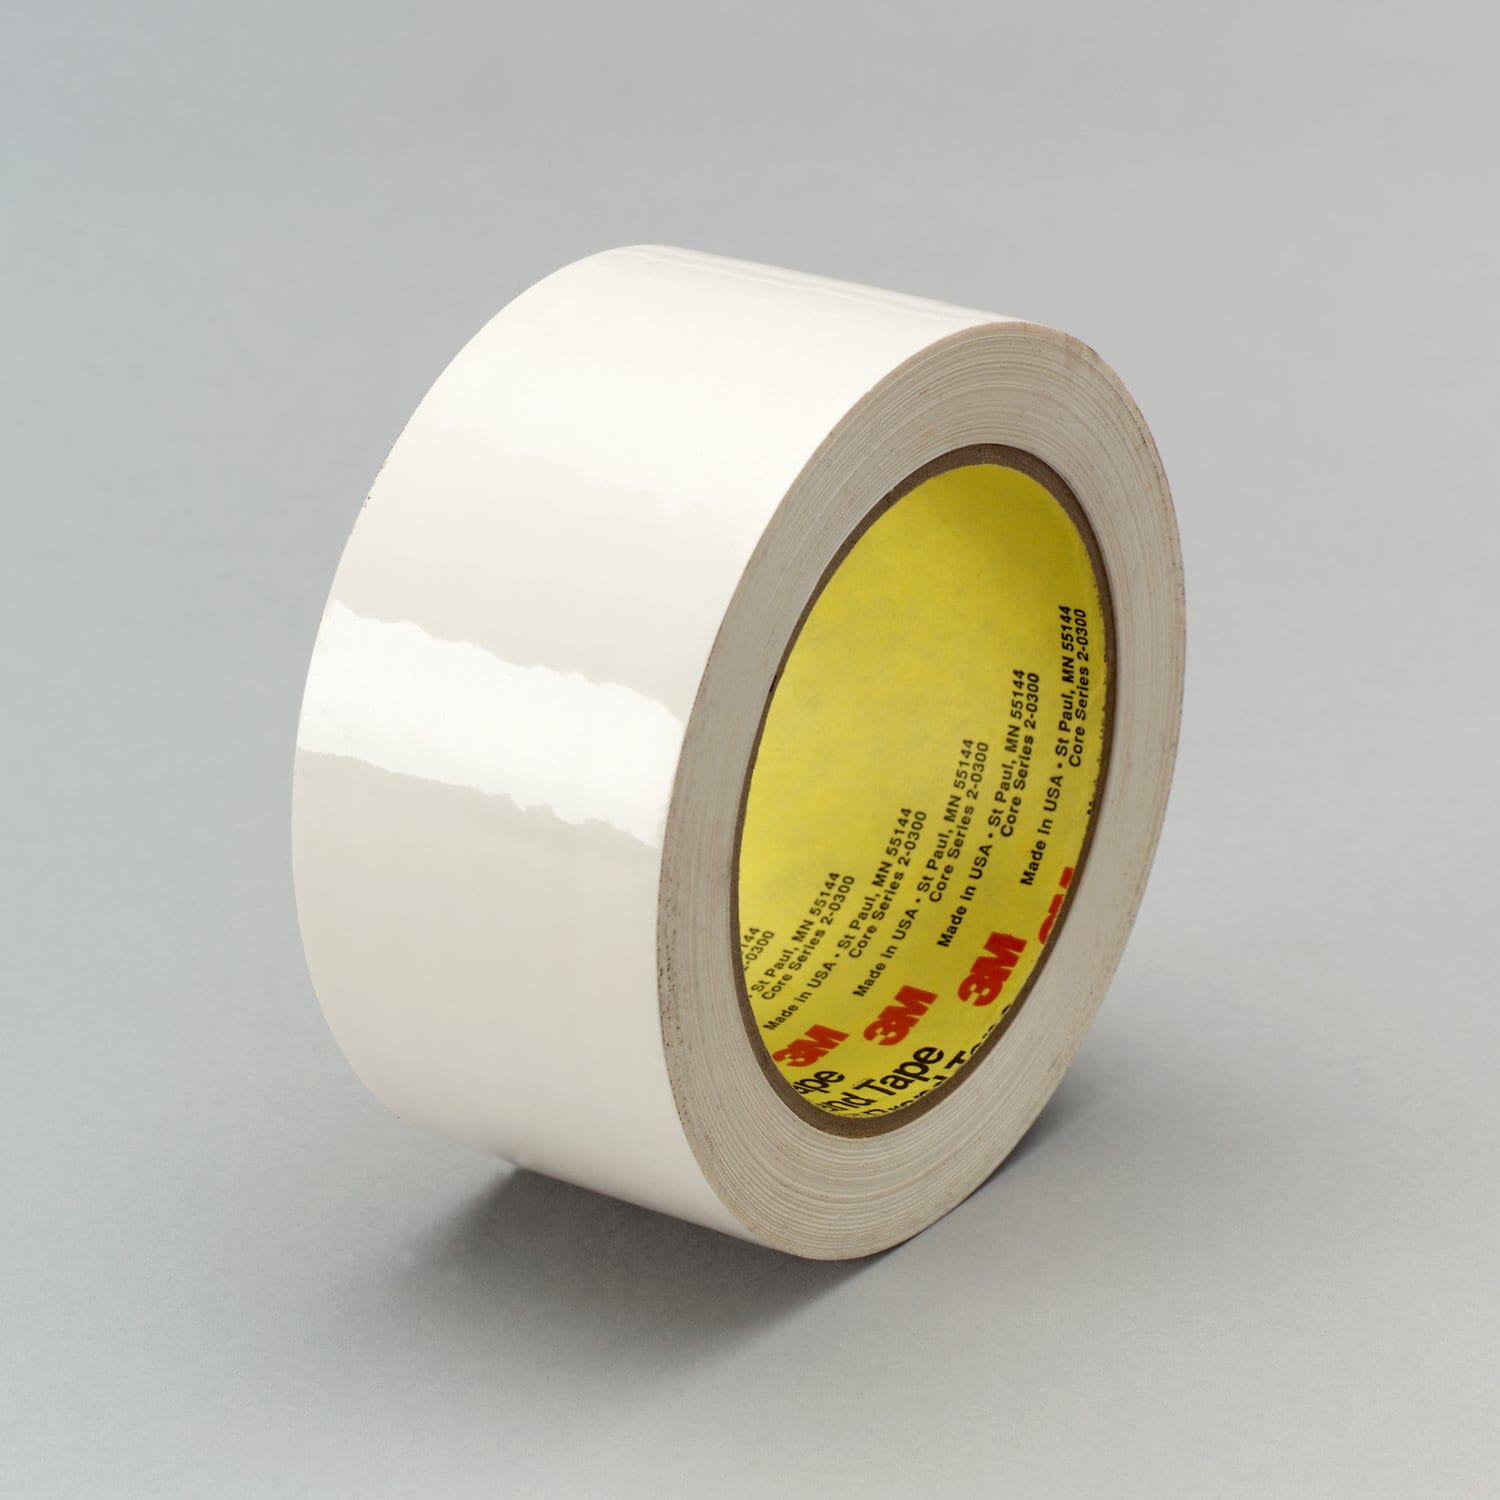 7010373256 - 3M Polyethylene Tape 483, White, 3 in x 36 yd, 5.0 mil, 12 rolls per
case